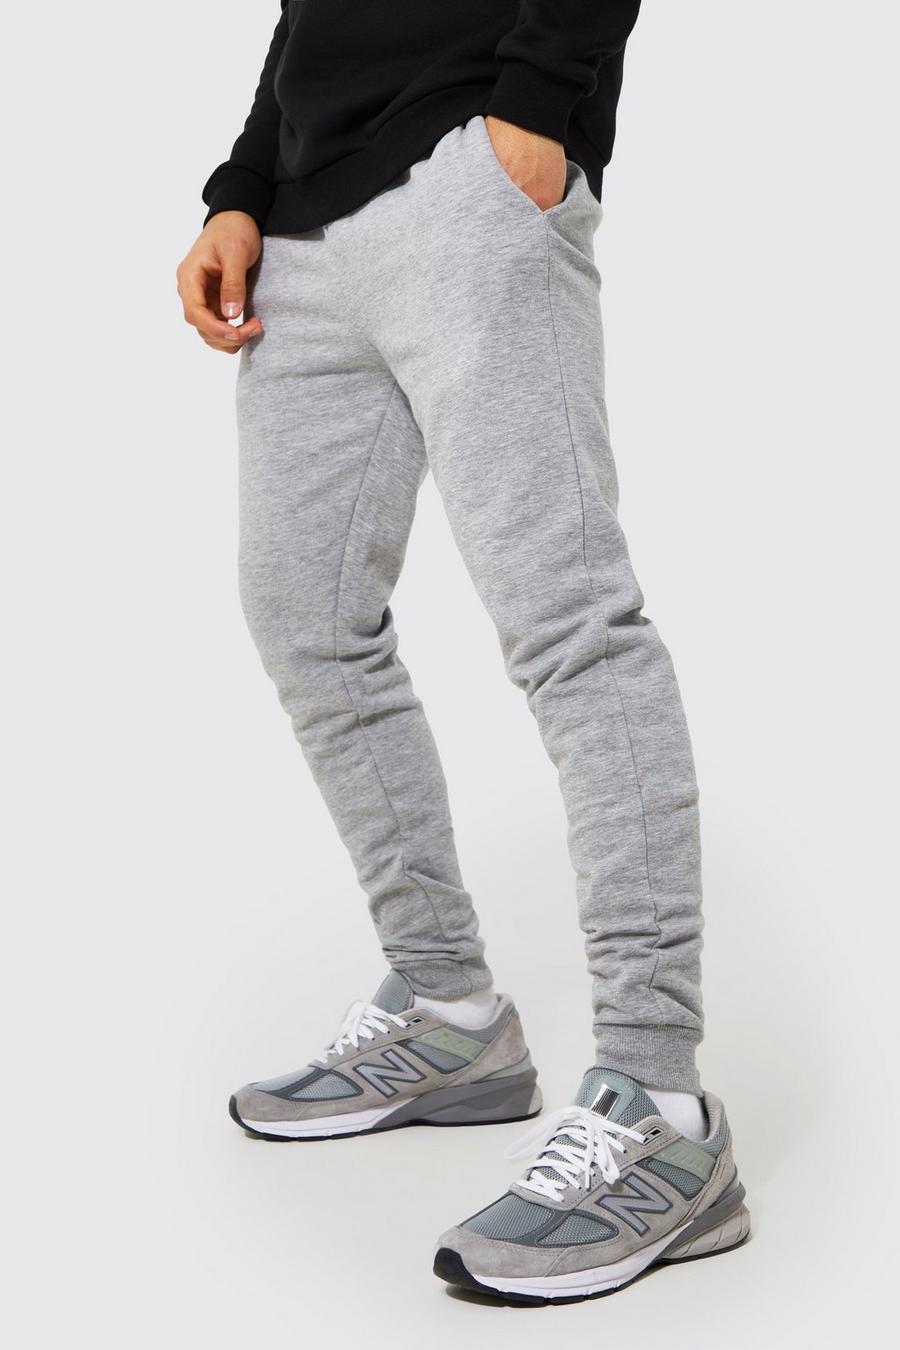 Grey marl gris מכנסי ריצה בייסיק סקיני מבד משולב בכותנת REEL